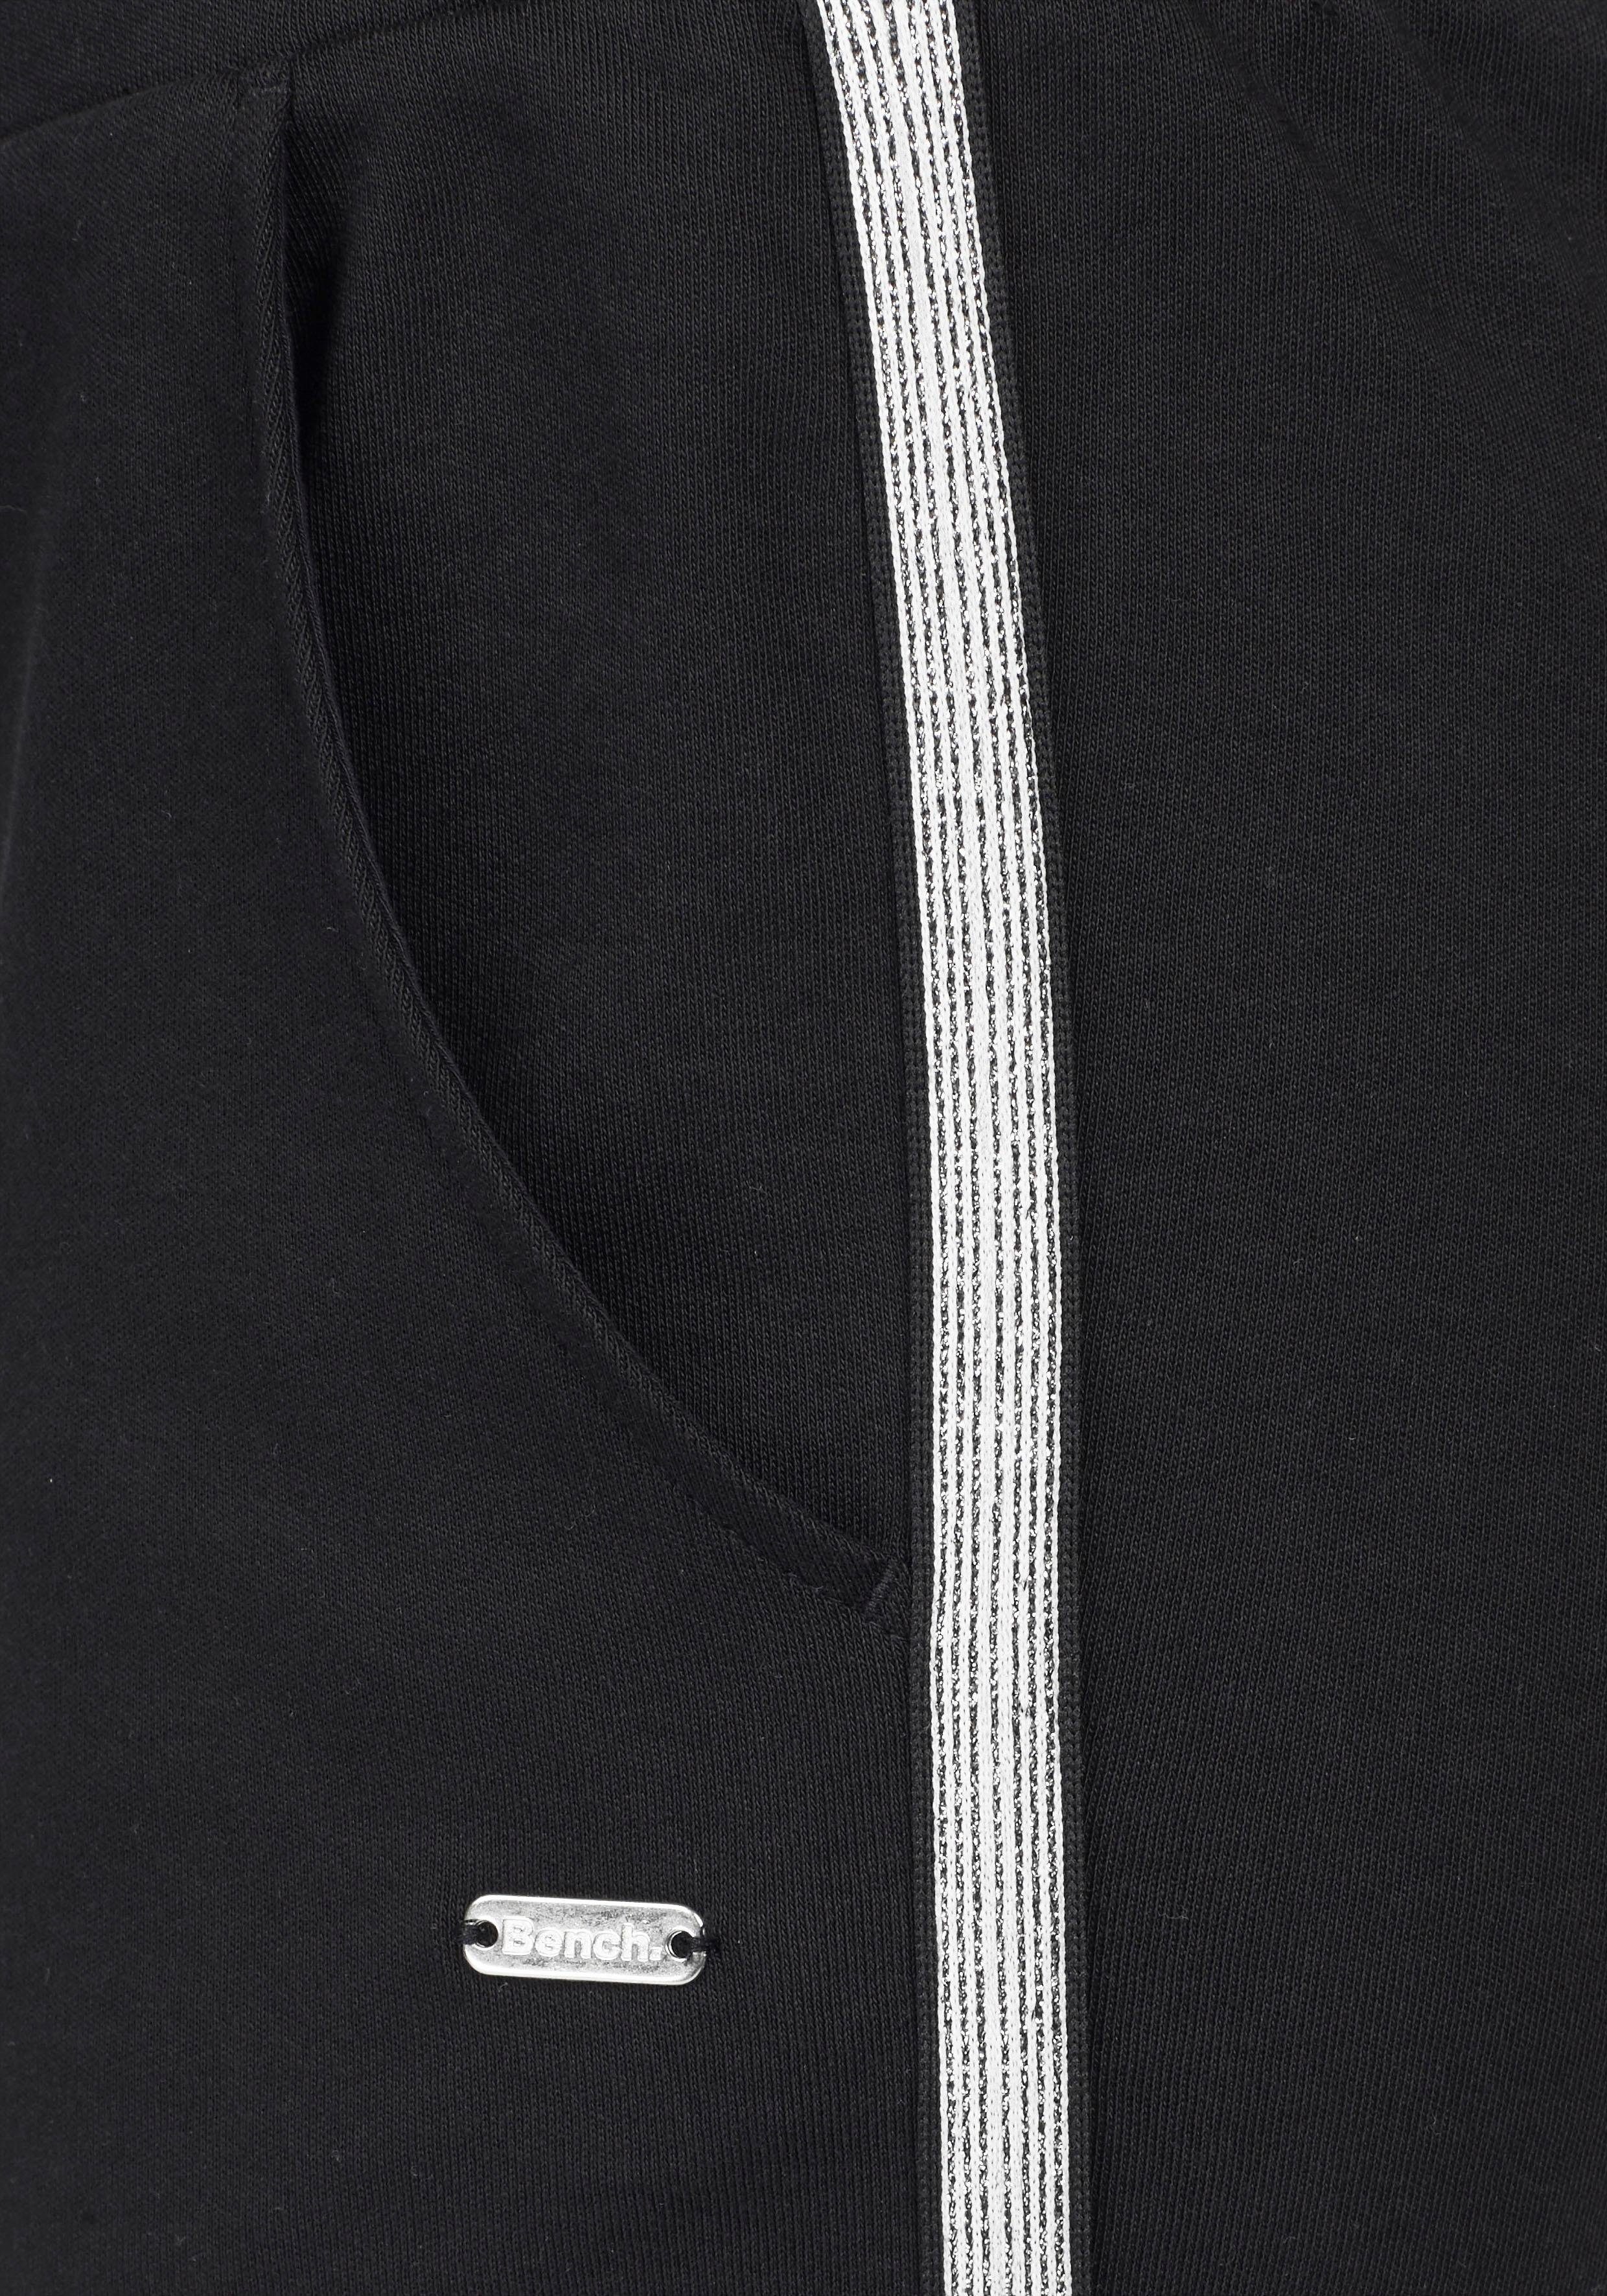 Bench. Loungewear Homewearhose schwarz mit Metallic-Streifen, Loungewear, Loungeanzug